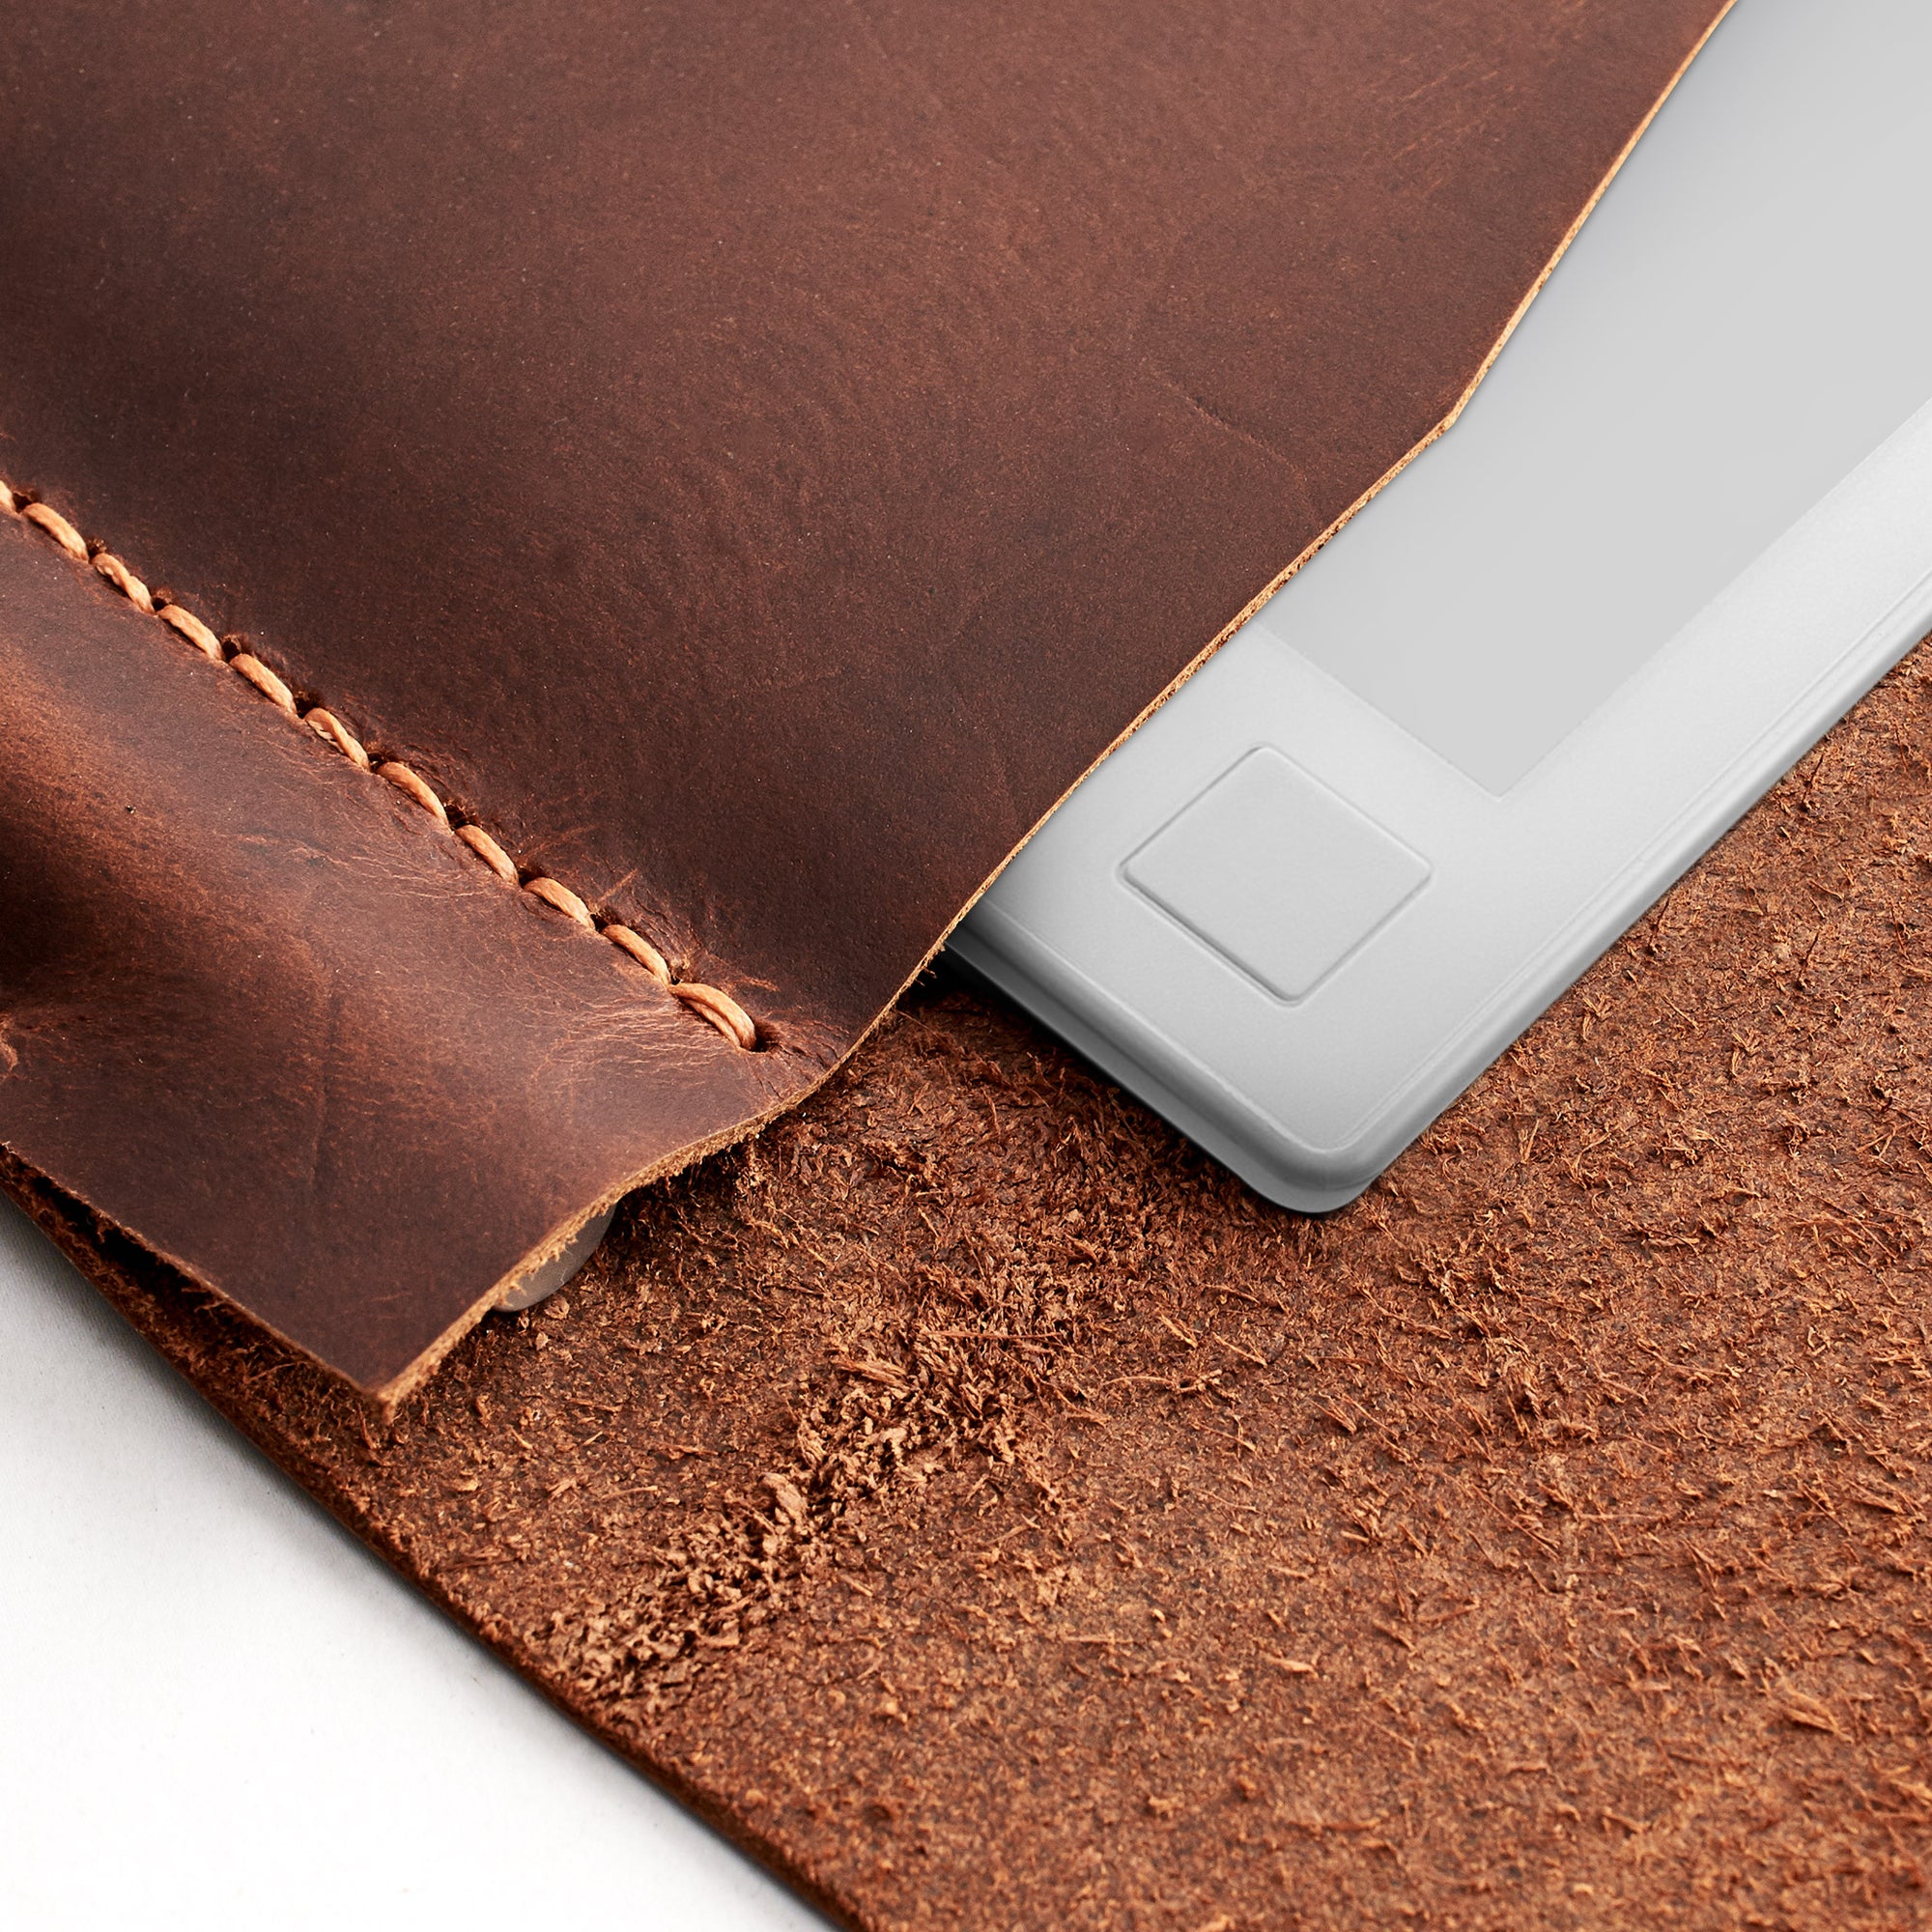 Market holder. Tan brown handcrafted leather reMarkable tablet case. Folio. Paper E-ink tablet minimalist sleeve design. 